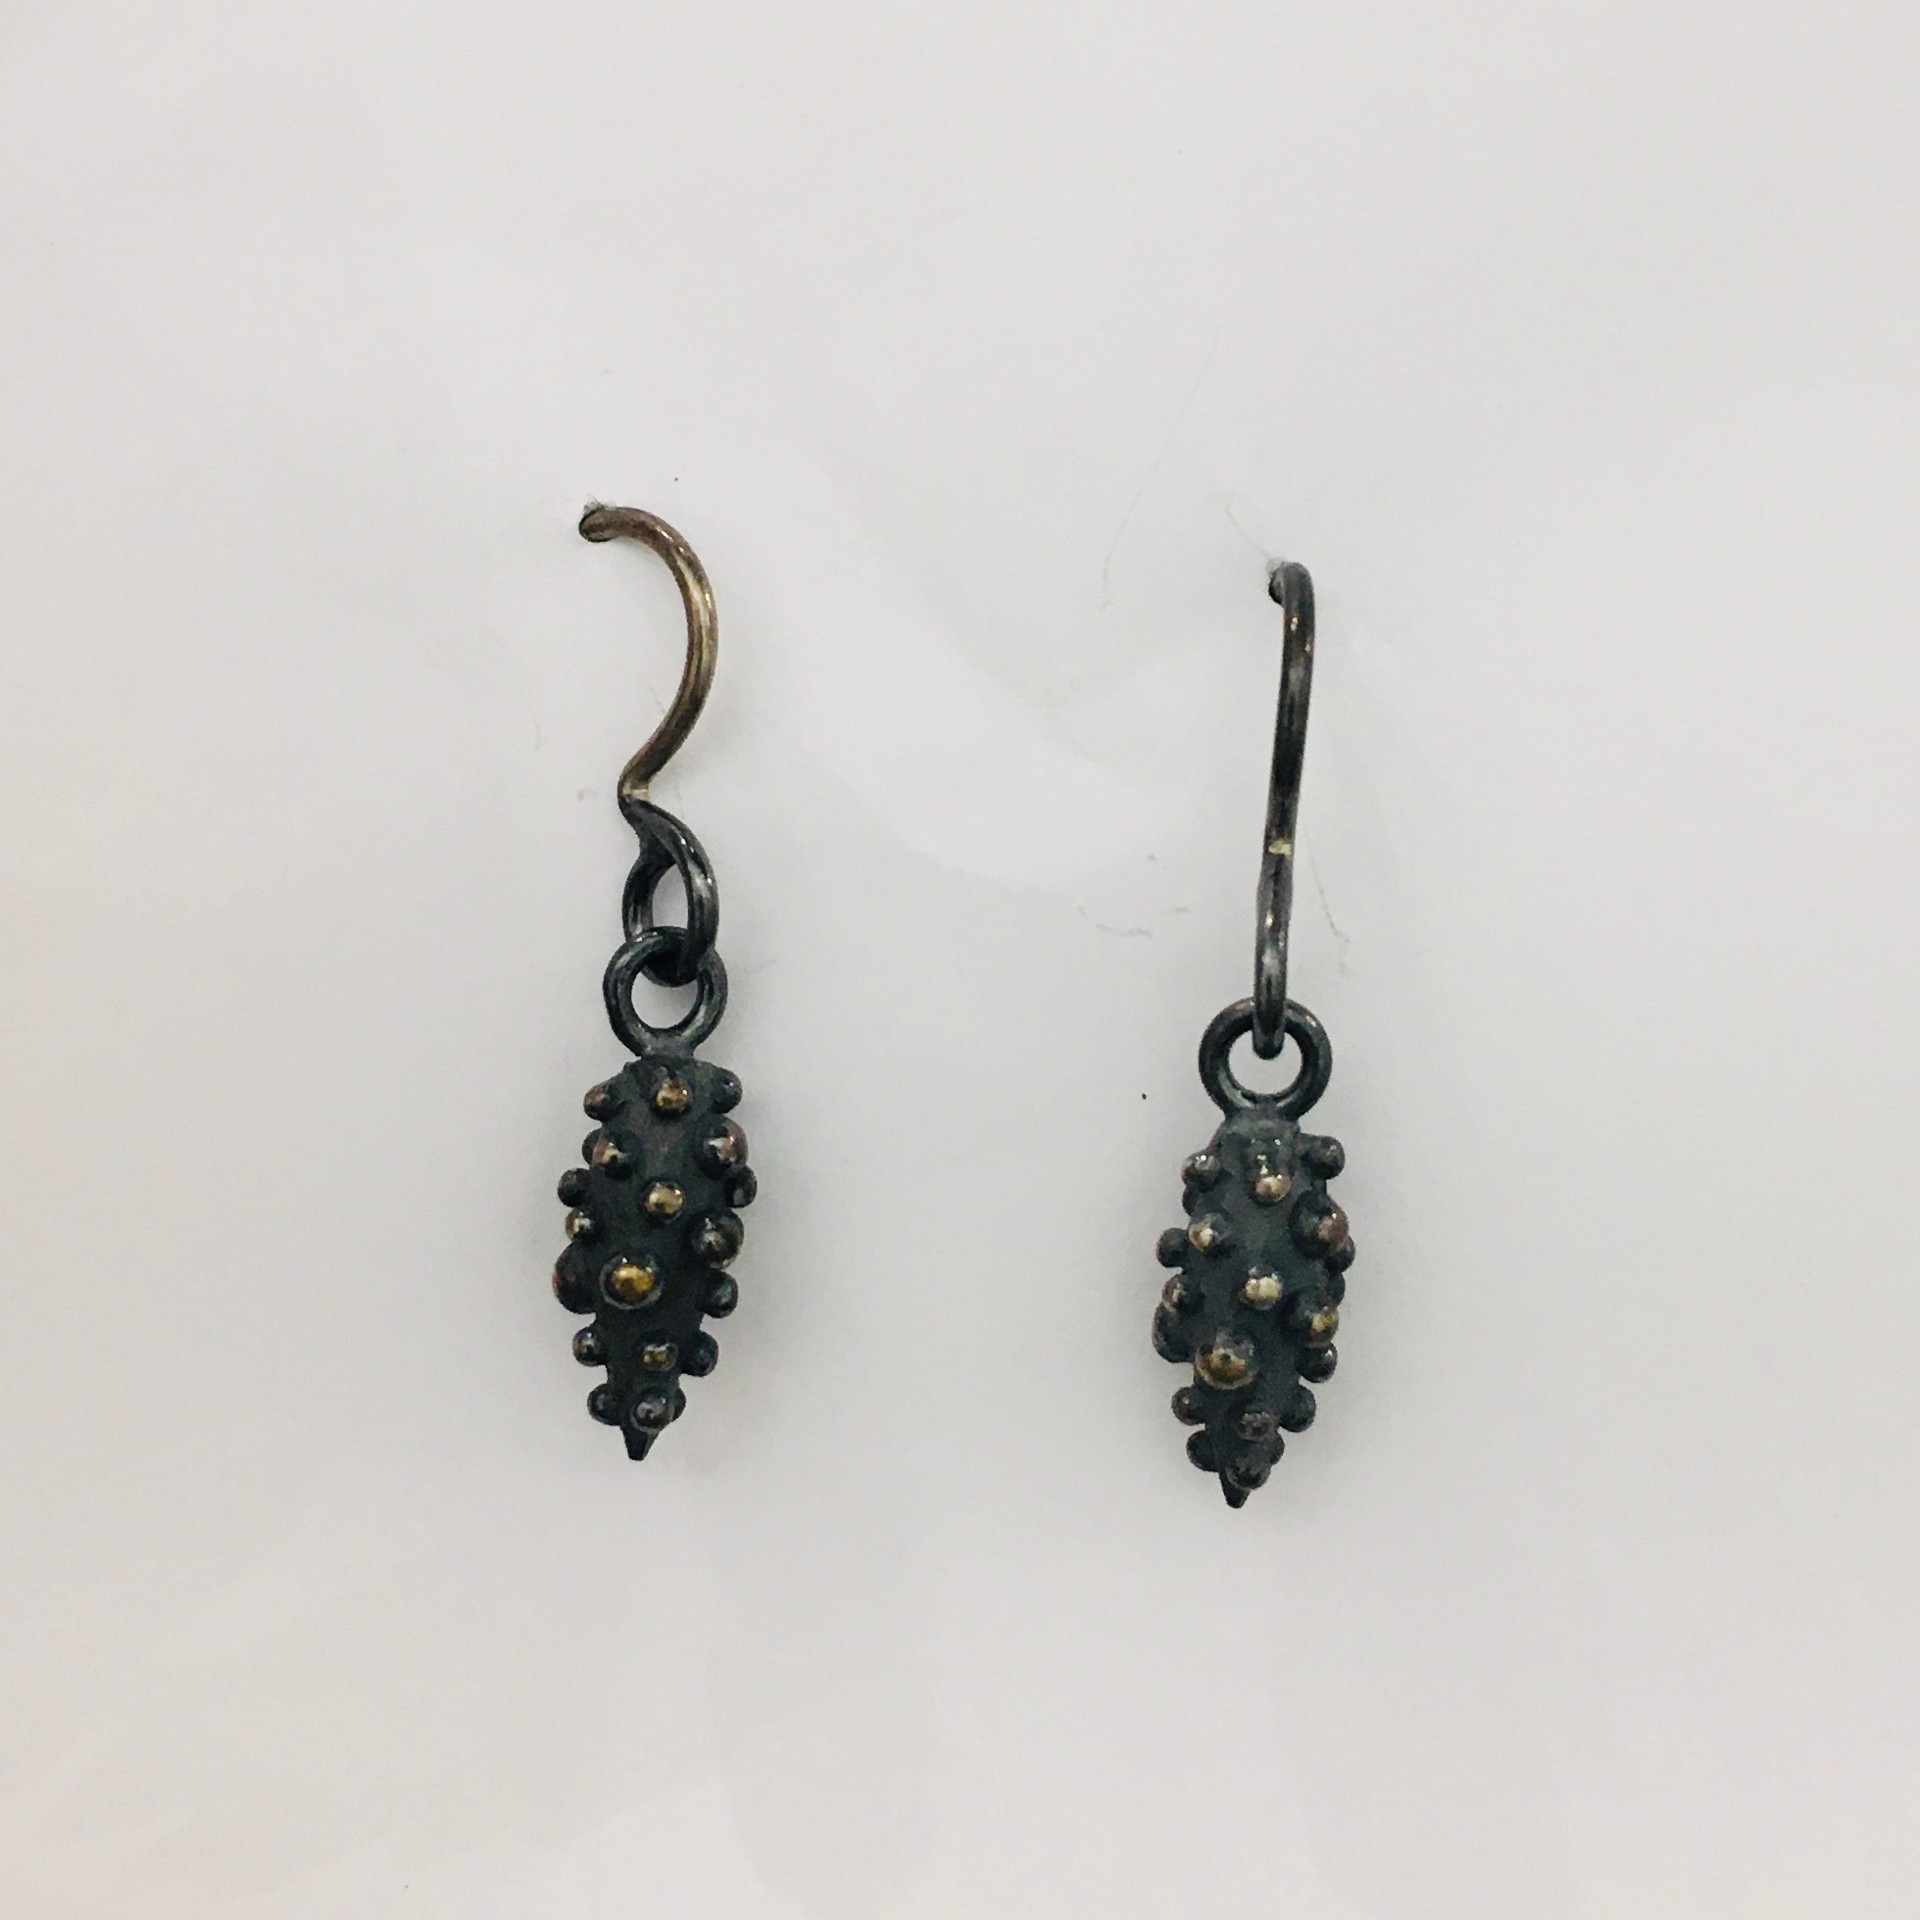 Small Oxidized Silver Earrings by DAHLIA KANNER